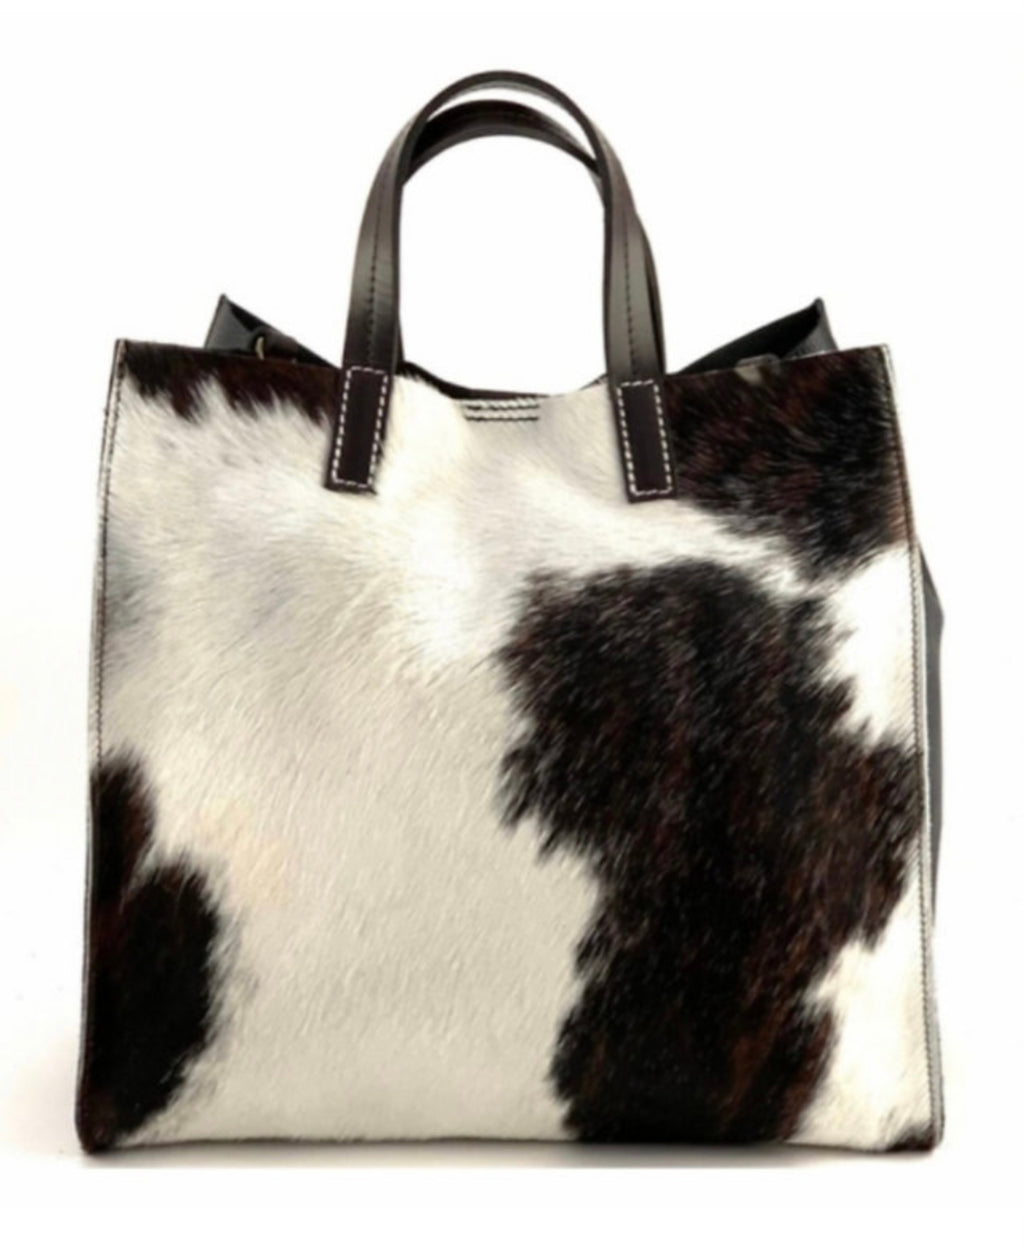 Calf Hair & Leather Handbag